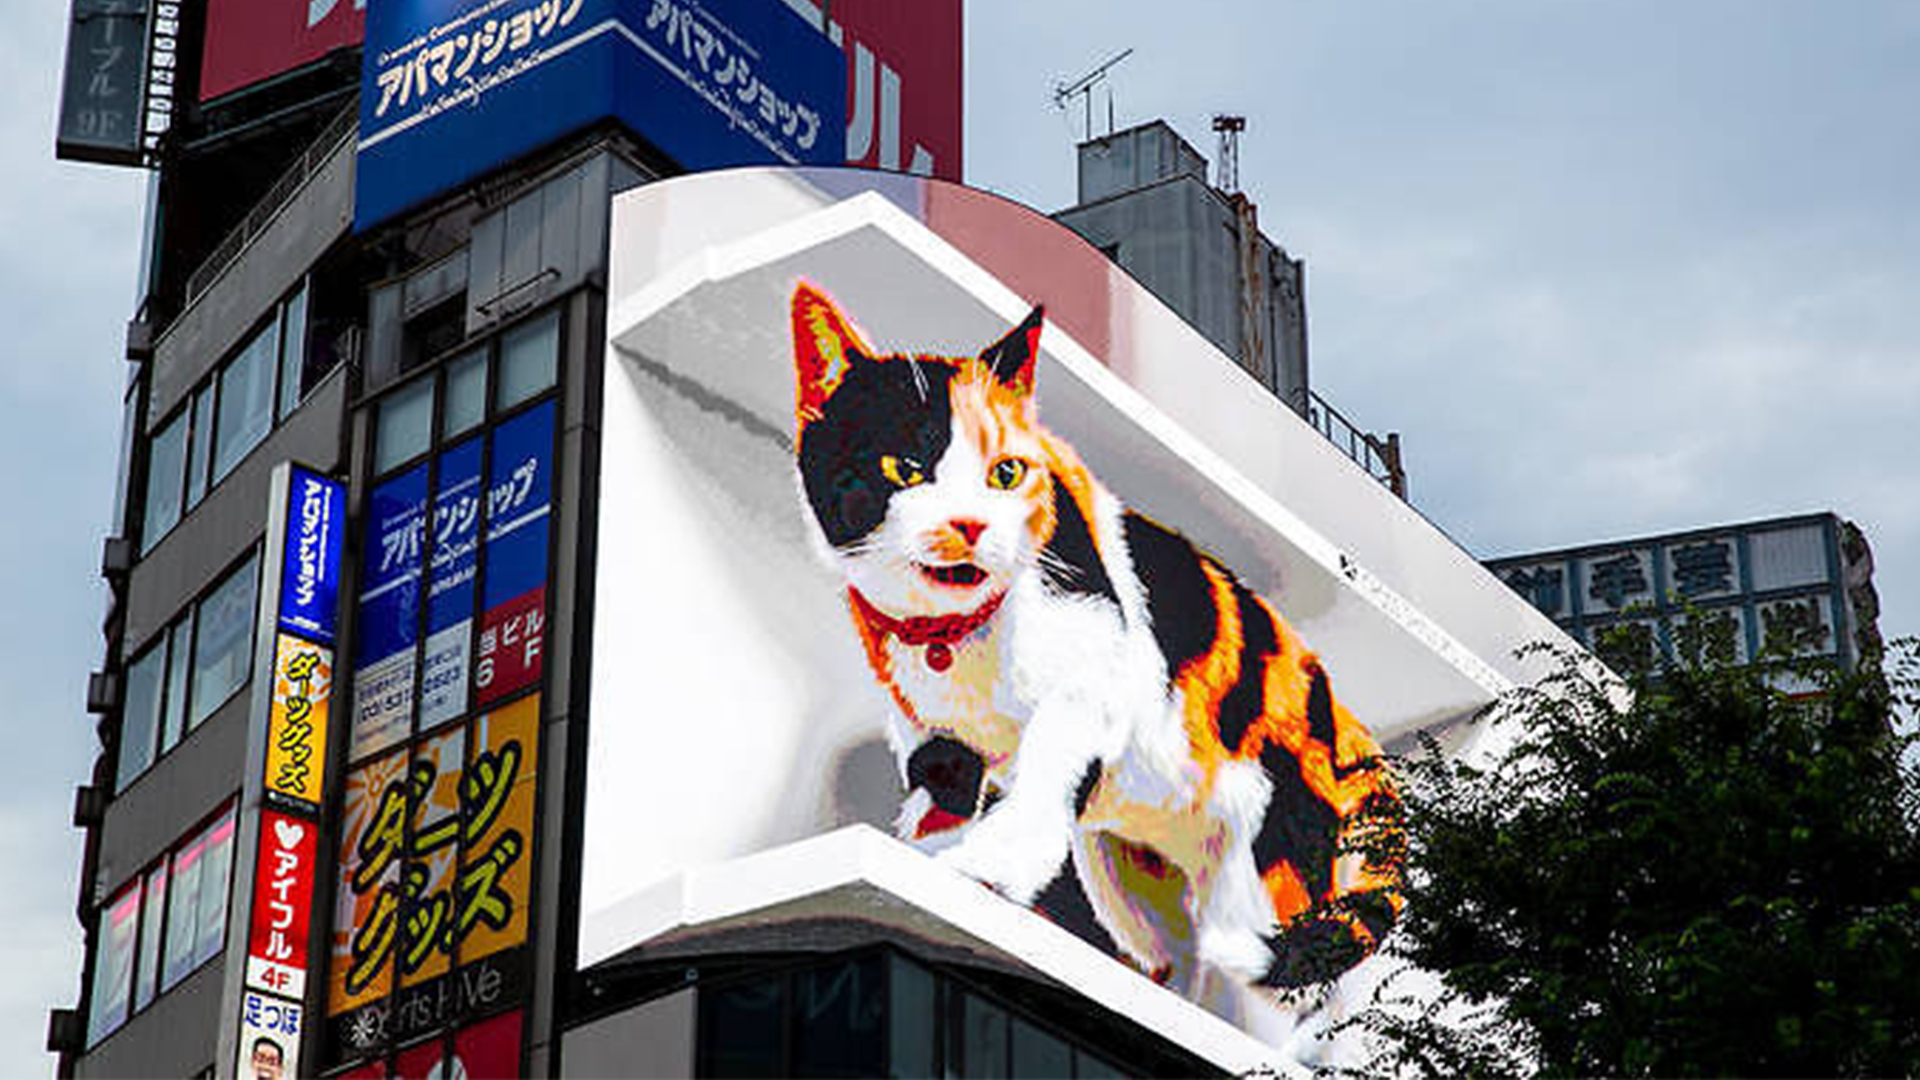 Astonishing 3D cat billboard stuns pedestrians (and the internet) |  Creative Bloq